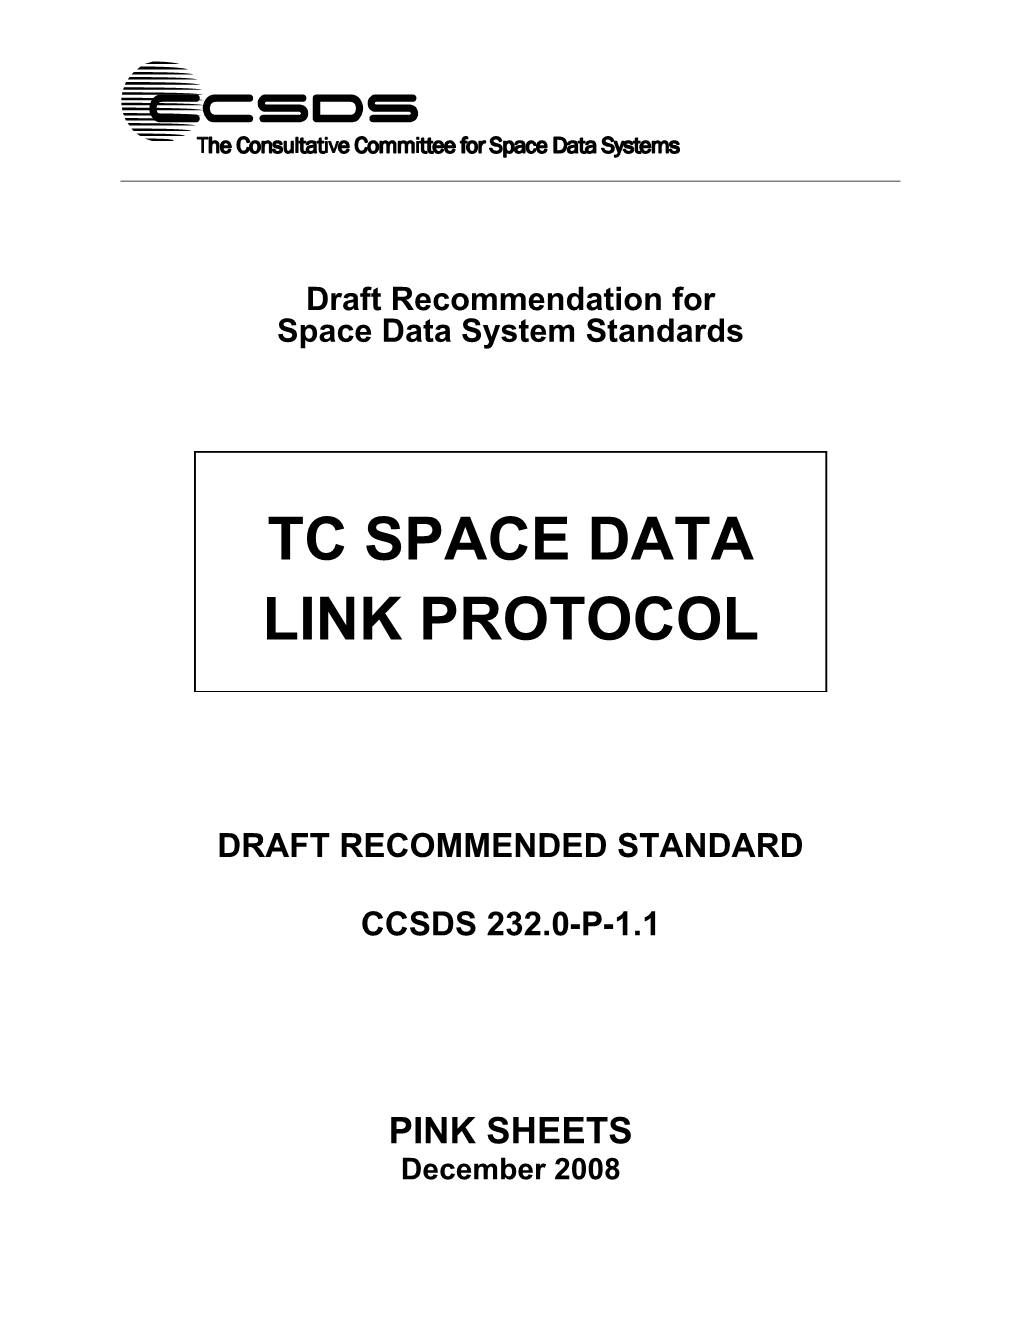 TC Space Data Link Protocol